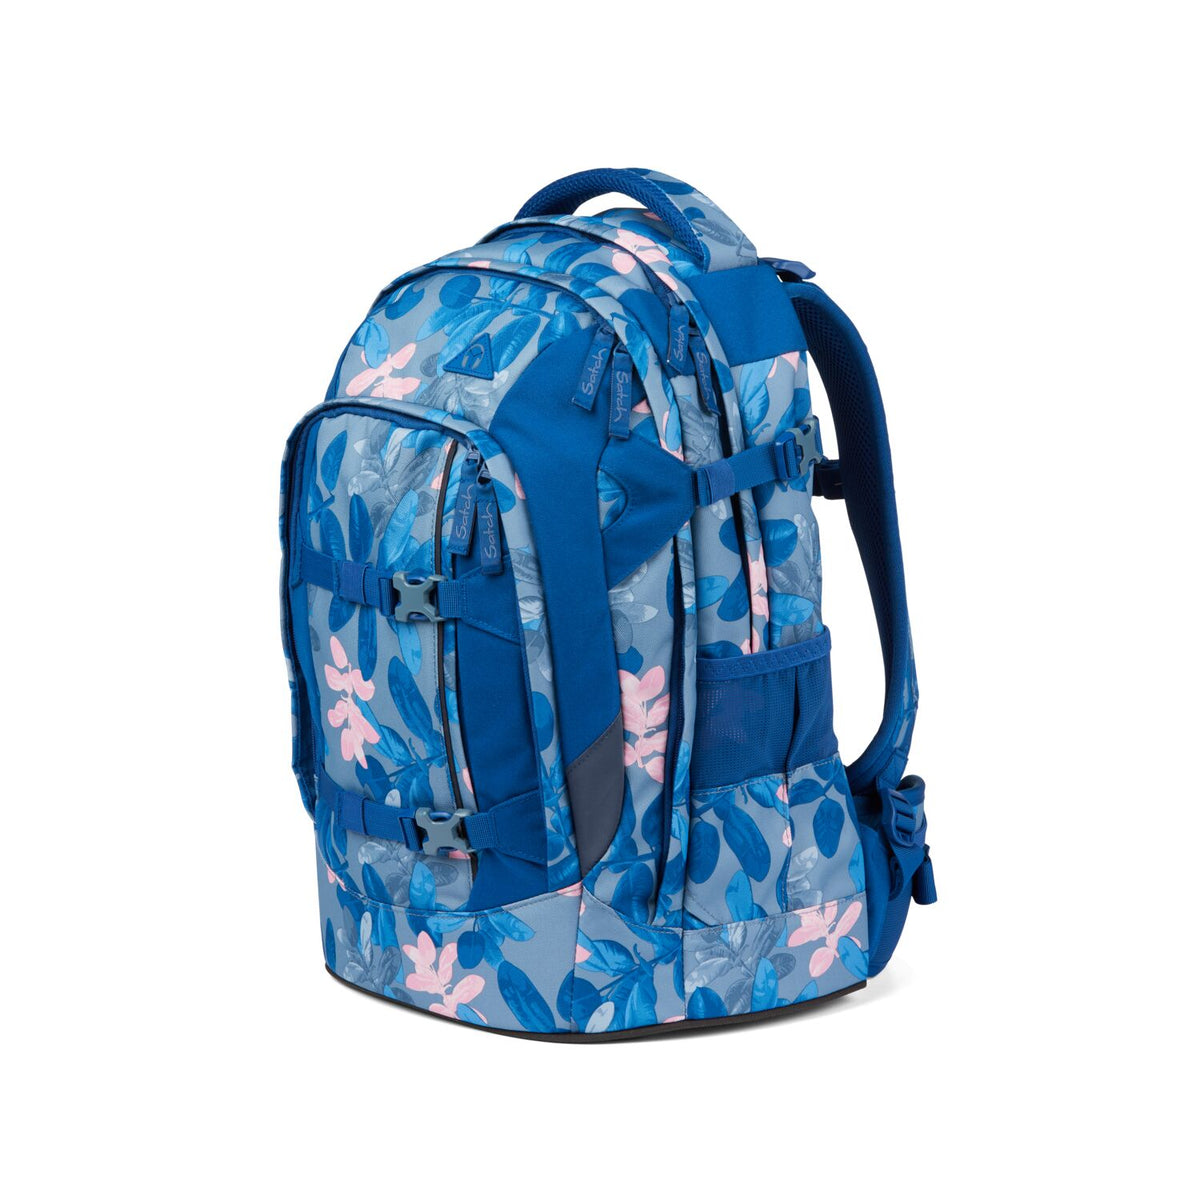 Satch school backpack for teenage girls